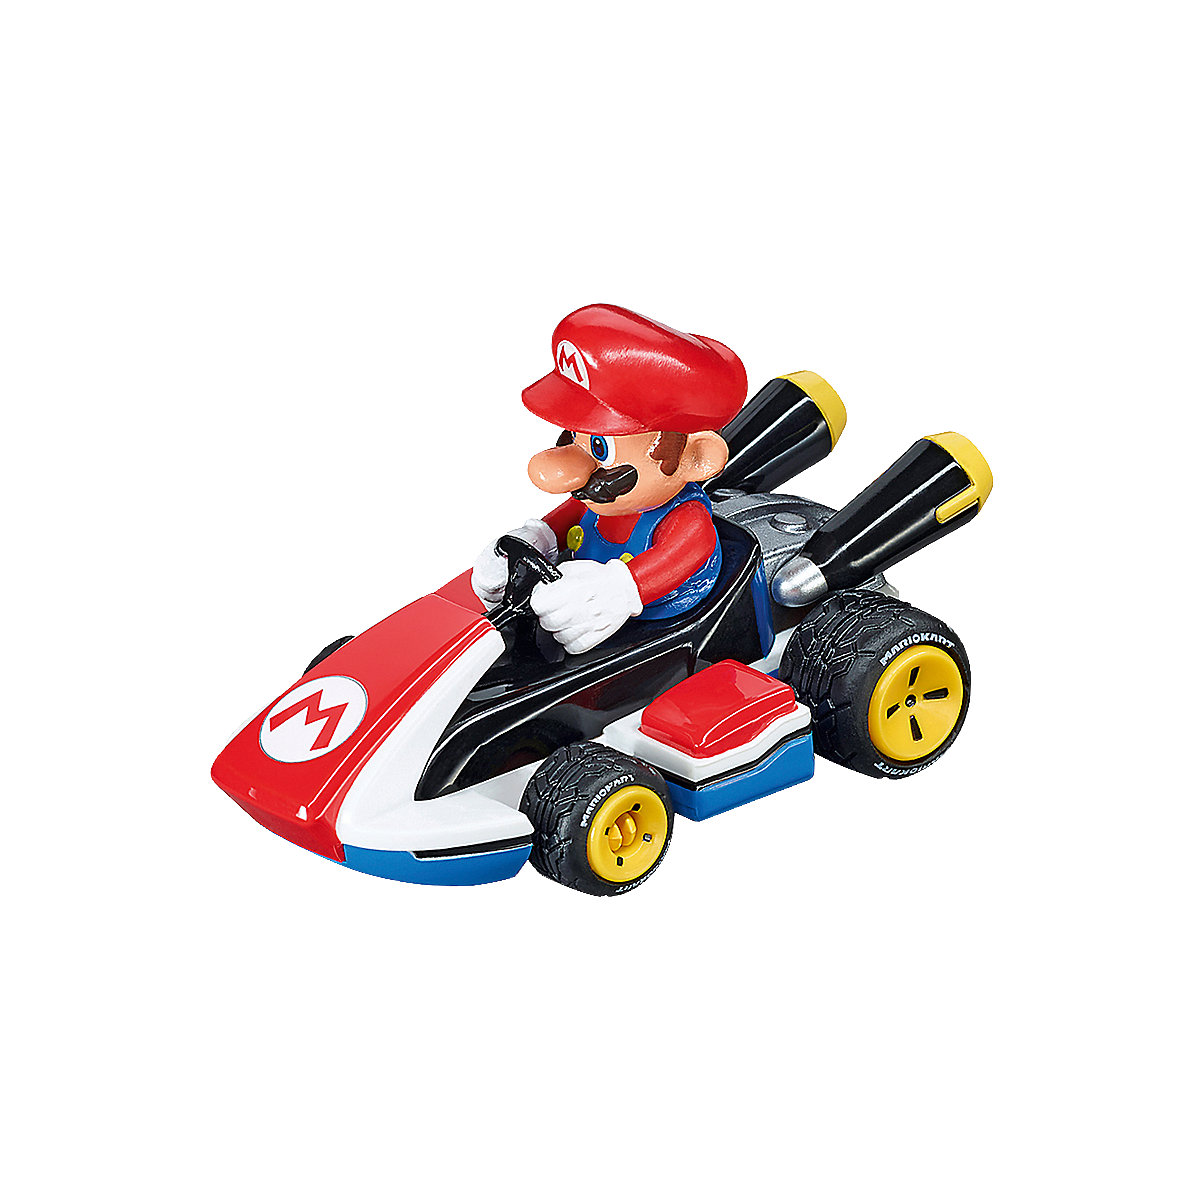 CARRERA GO!!! Slot Car 64033 Nintendo Mario Kart™ 8 Mario